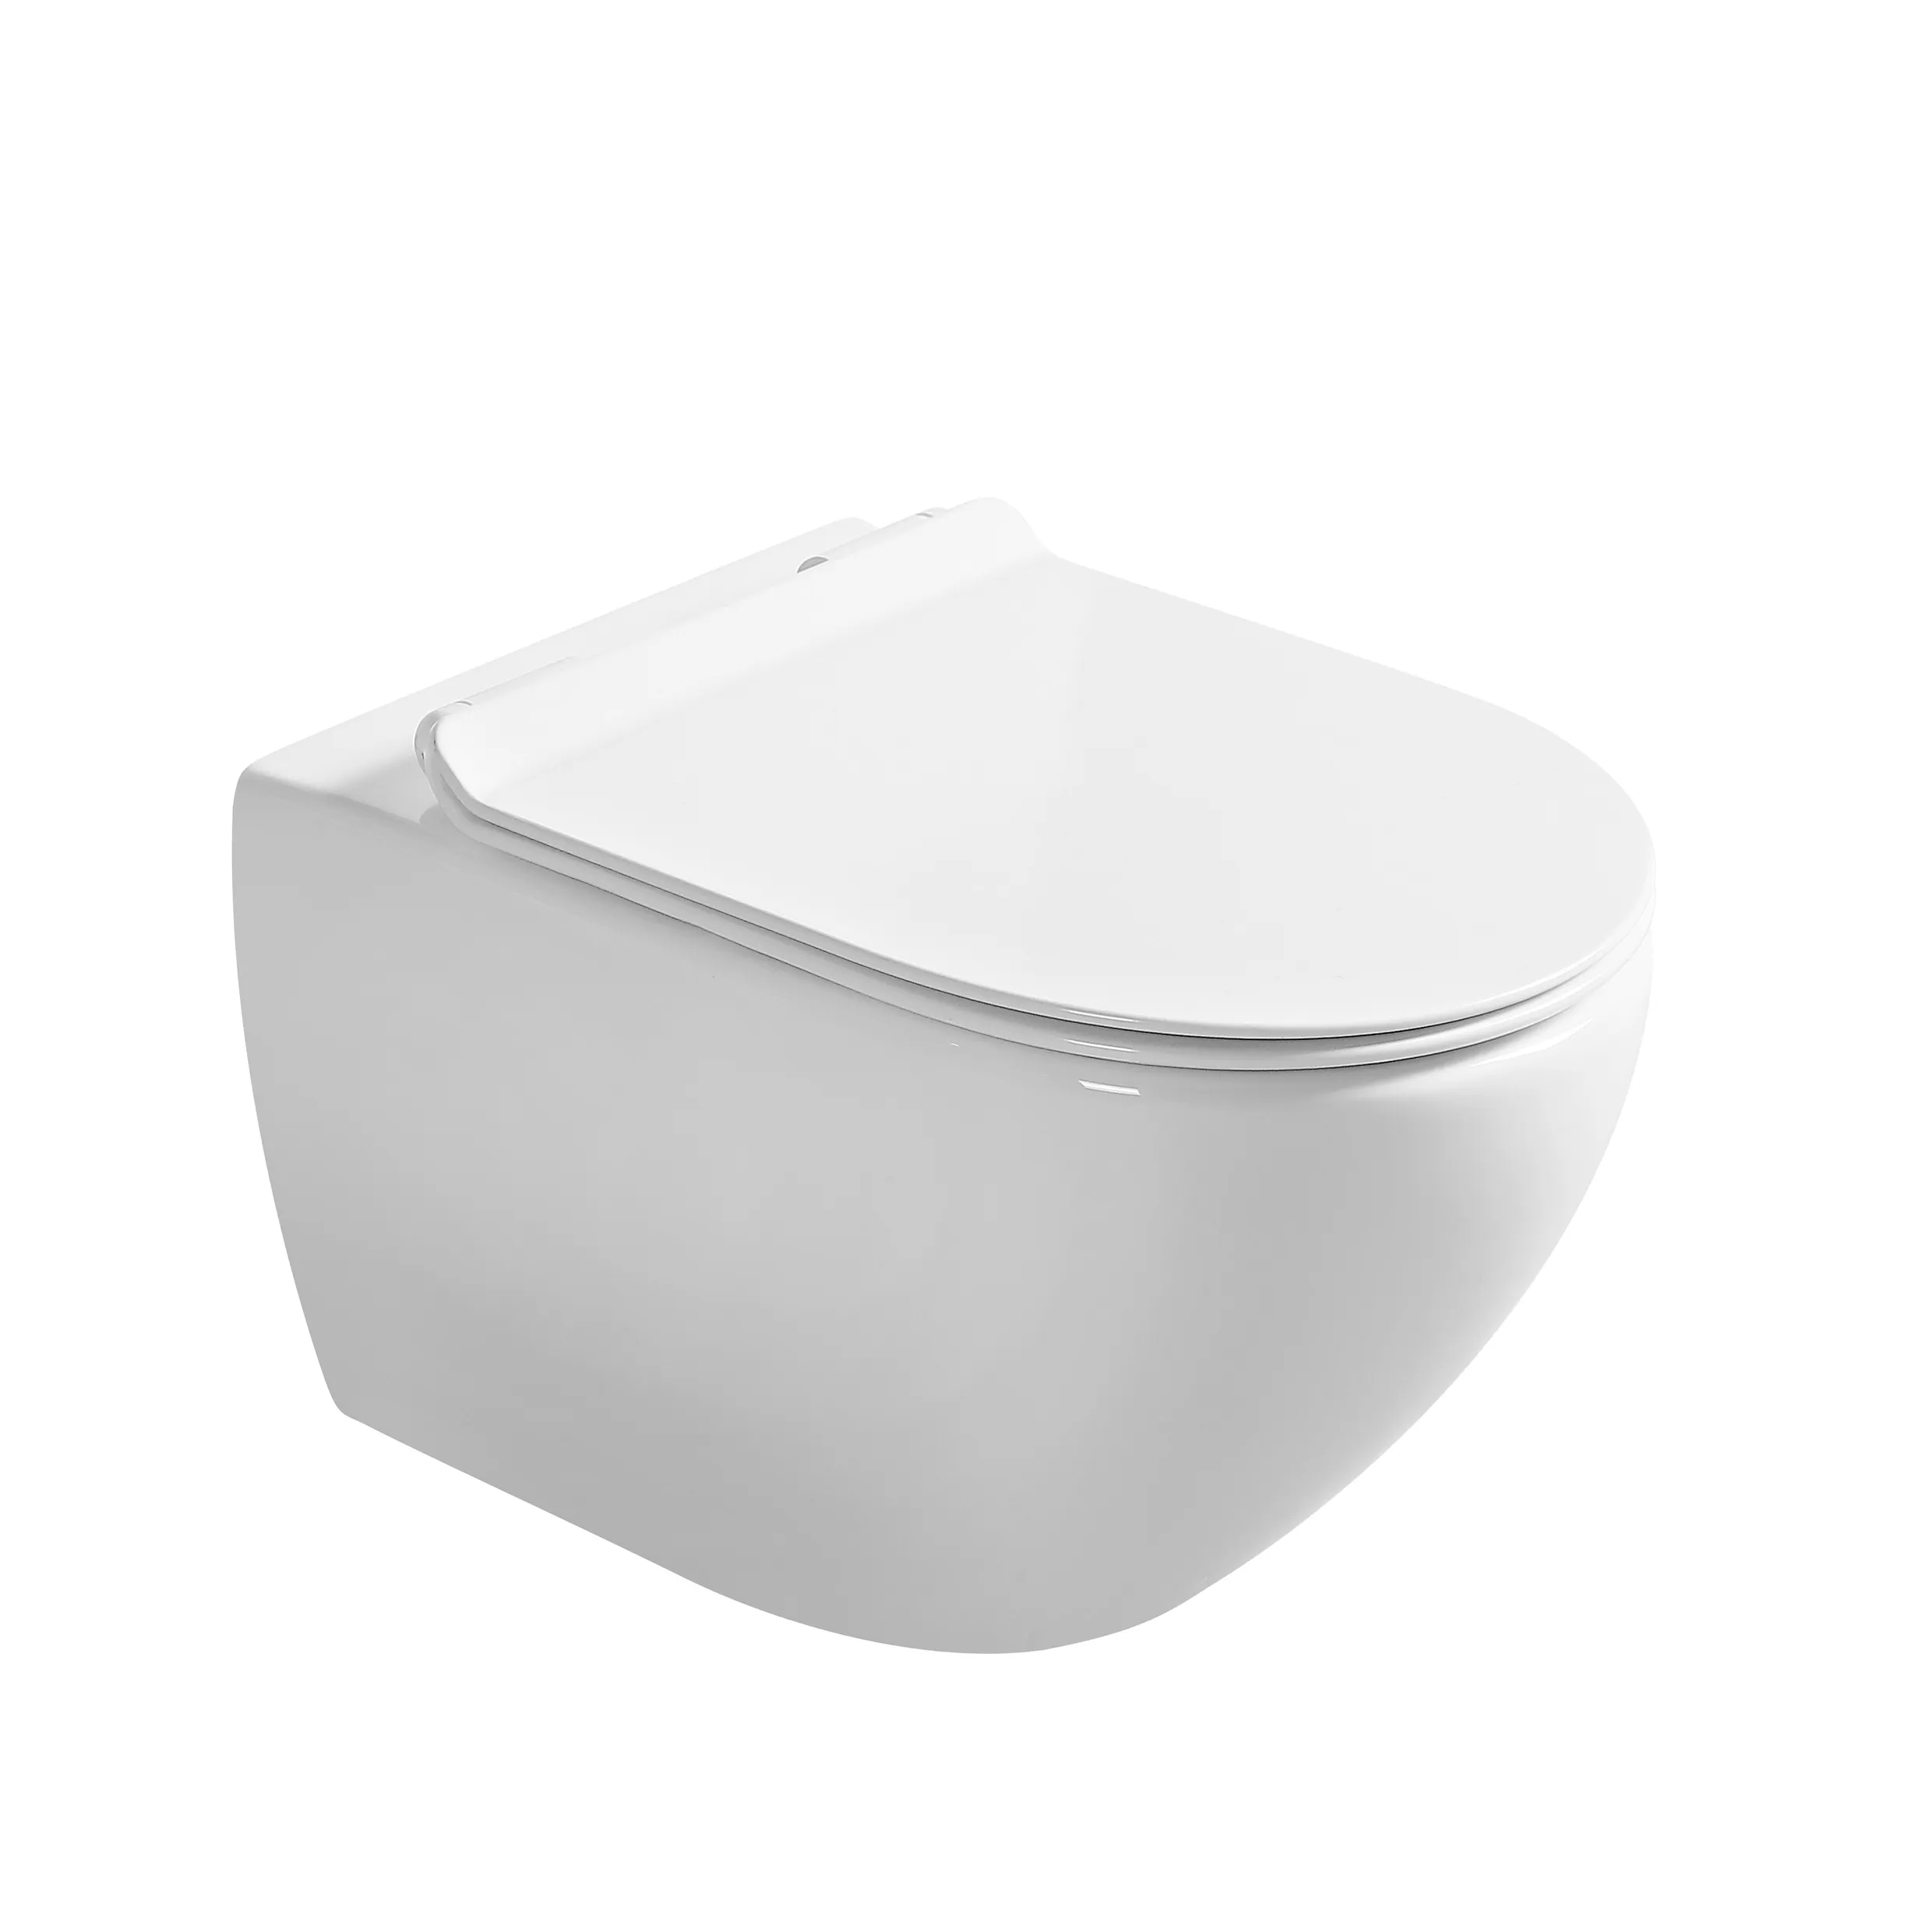 उच्च गुणवत्ता यूरोपीय सेनेटरी वेयर निर्माता बिक्री सफेद चीनी मिट्टी लक्जरी मिट्टी के दीवार लटका शौचालय